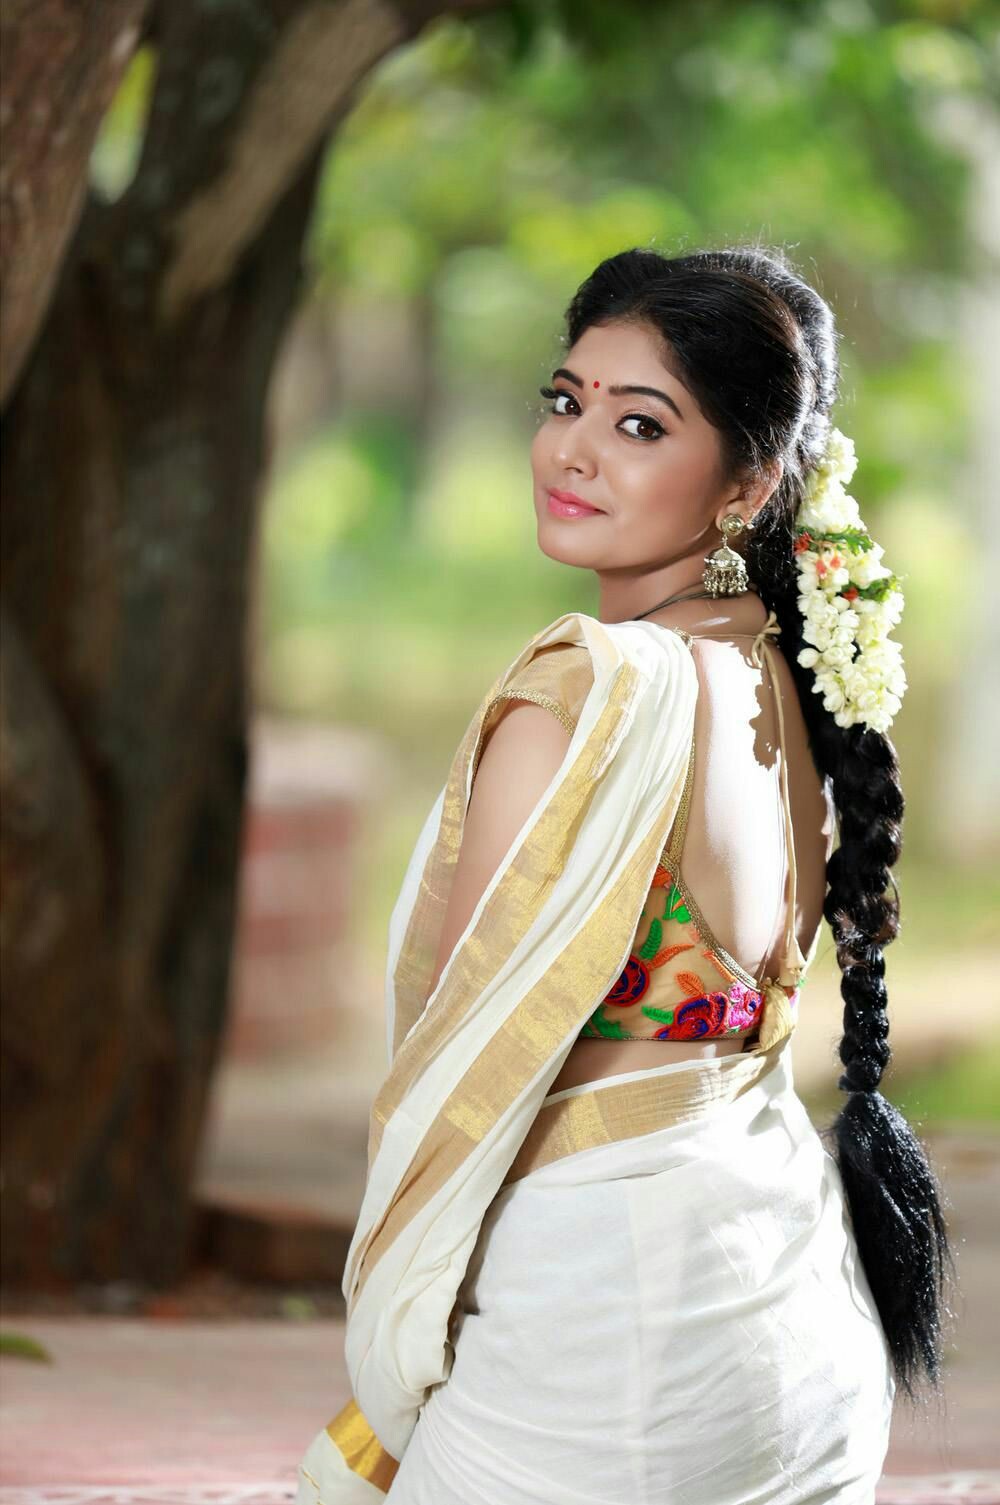 Beautiful Indian Women in Saree- Exclusive Photo Gallery!